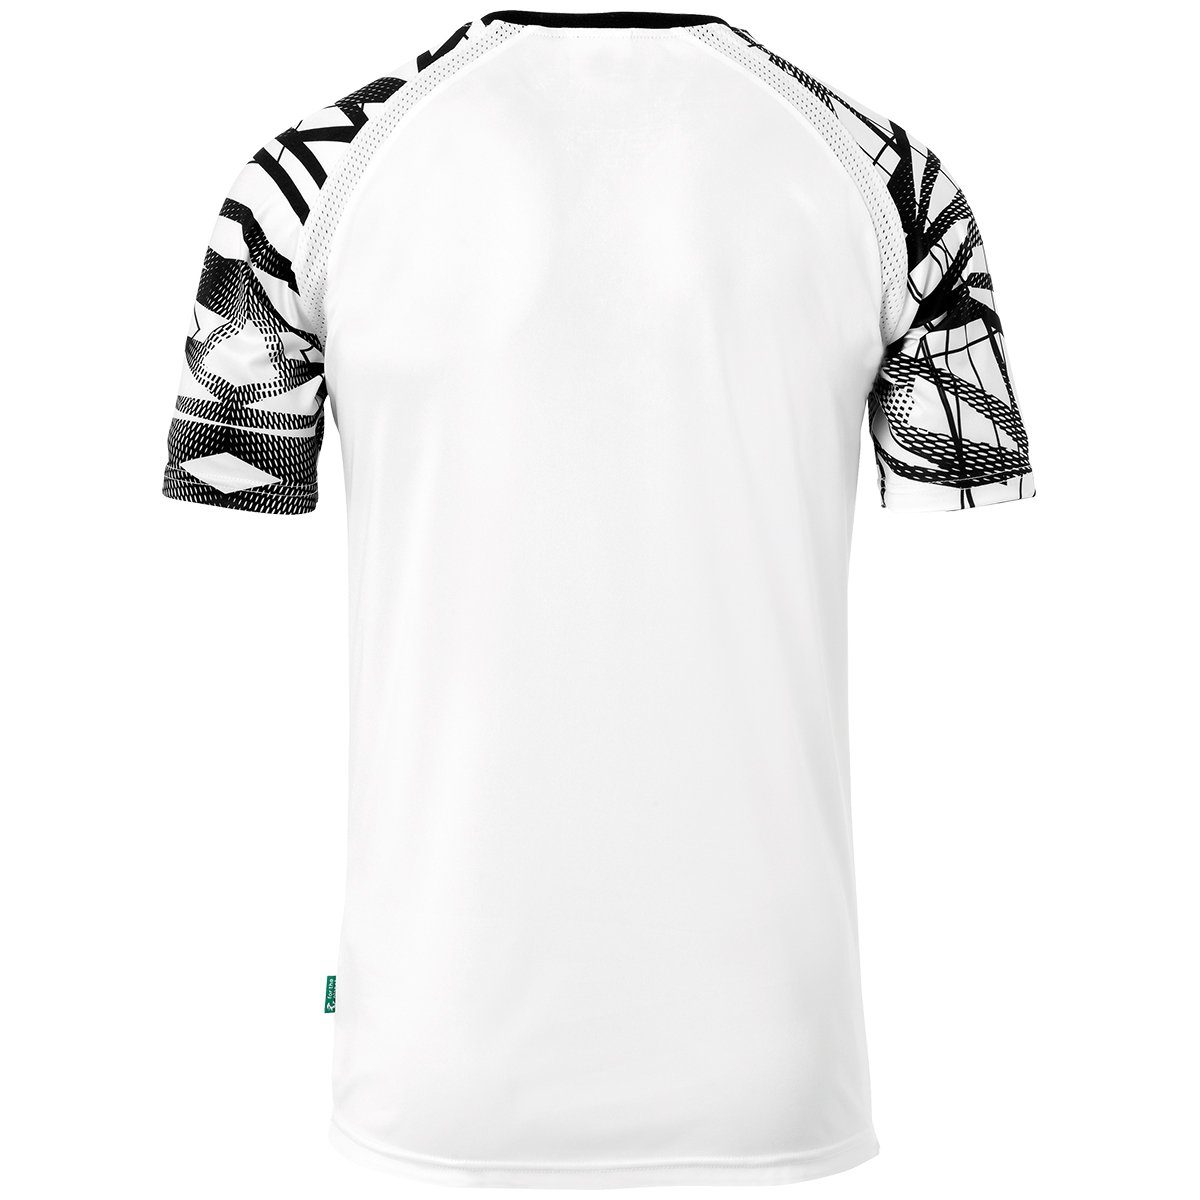 TRIKOT Trainings-T-Shirt GOAL atmungsaktiv Trainingsshirt KURZARM weiß/schwarz 25 uhlsport uhlsport